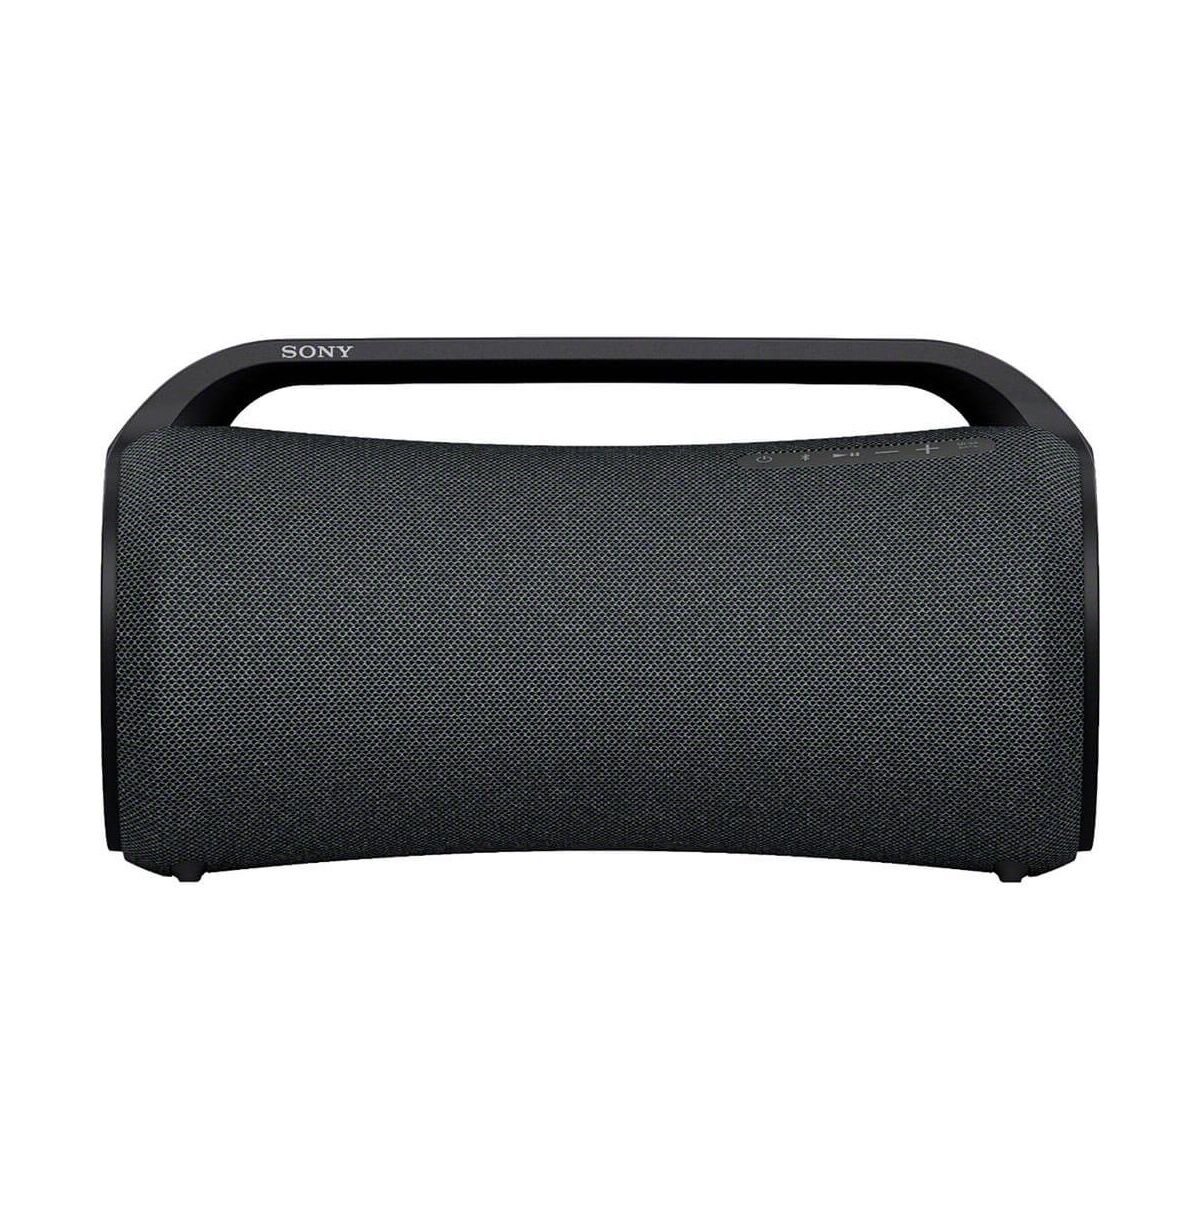 Sony XG500 Portable Bluetooth Speaker - Black - Black